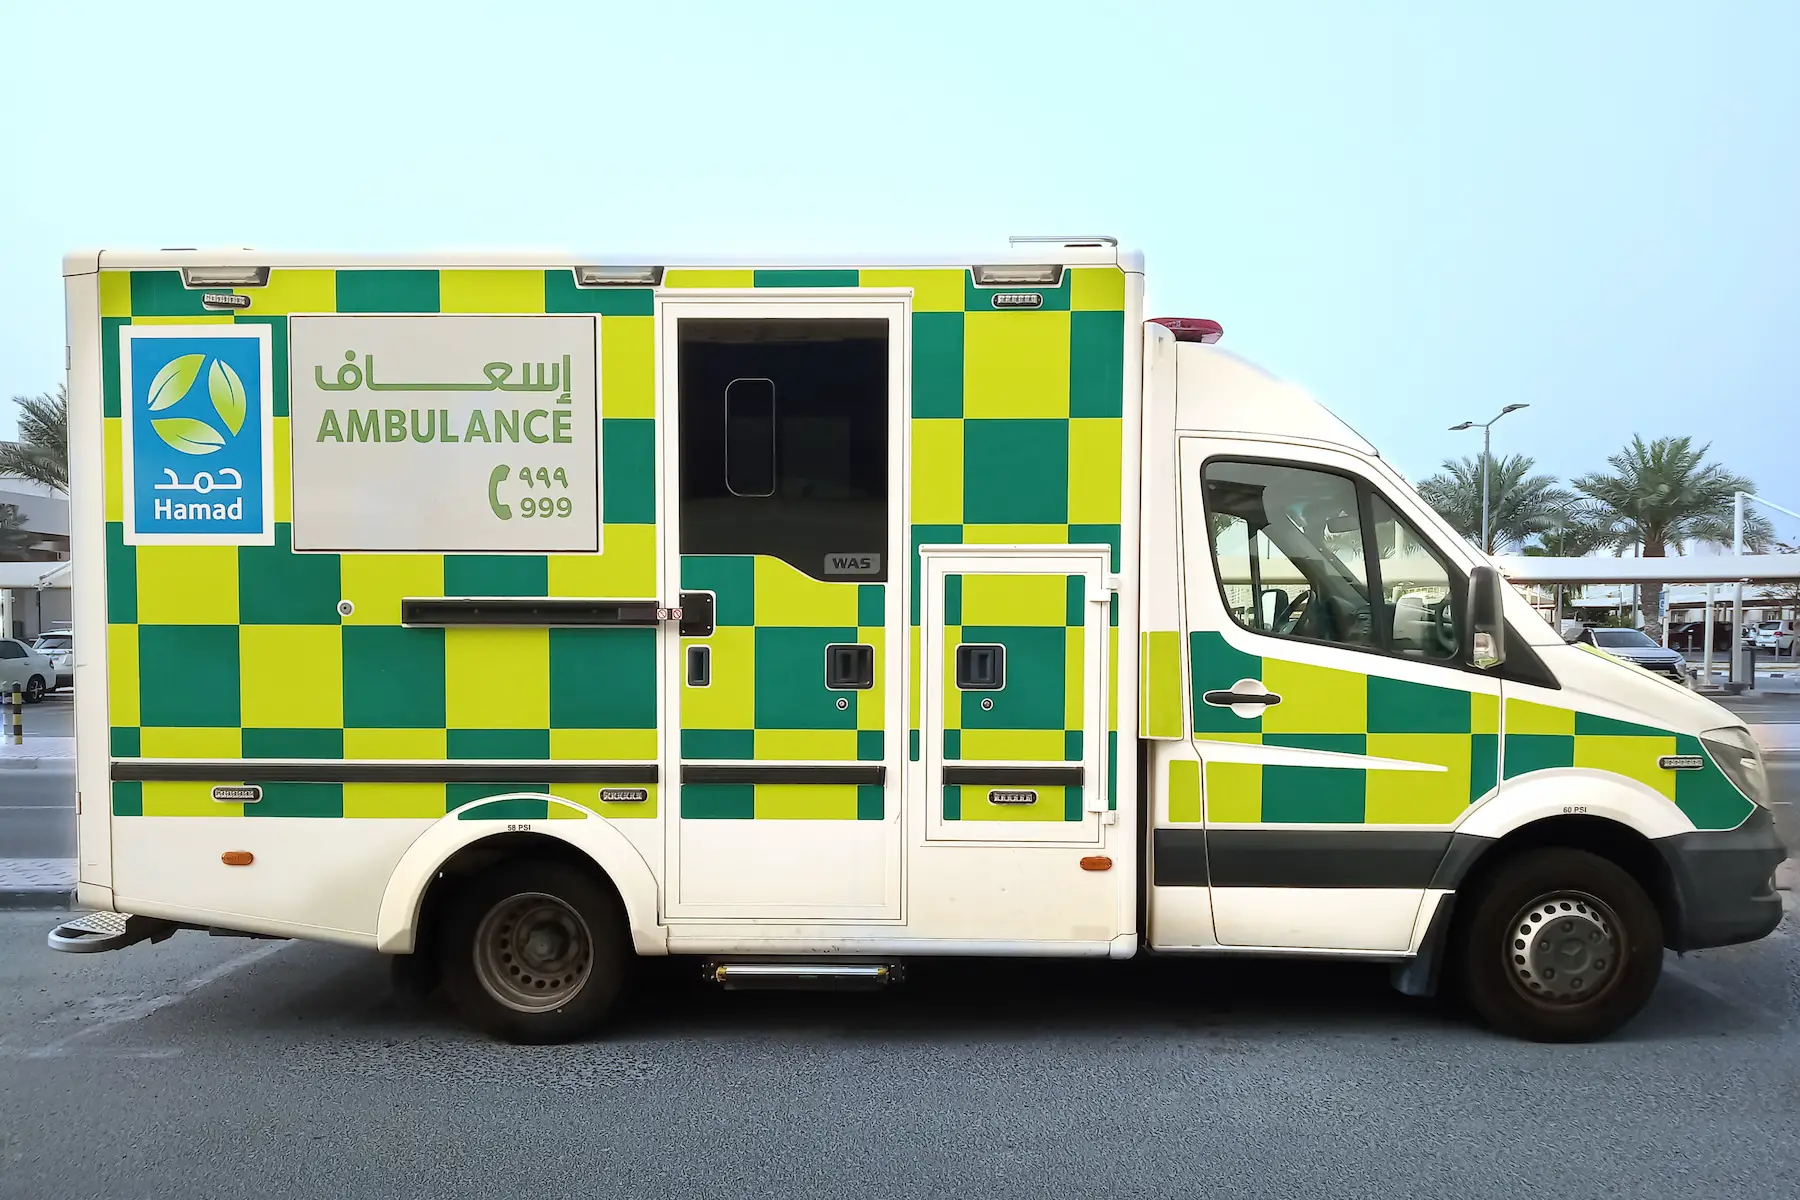 An ambulance in Qatar